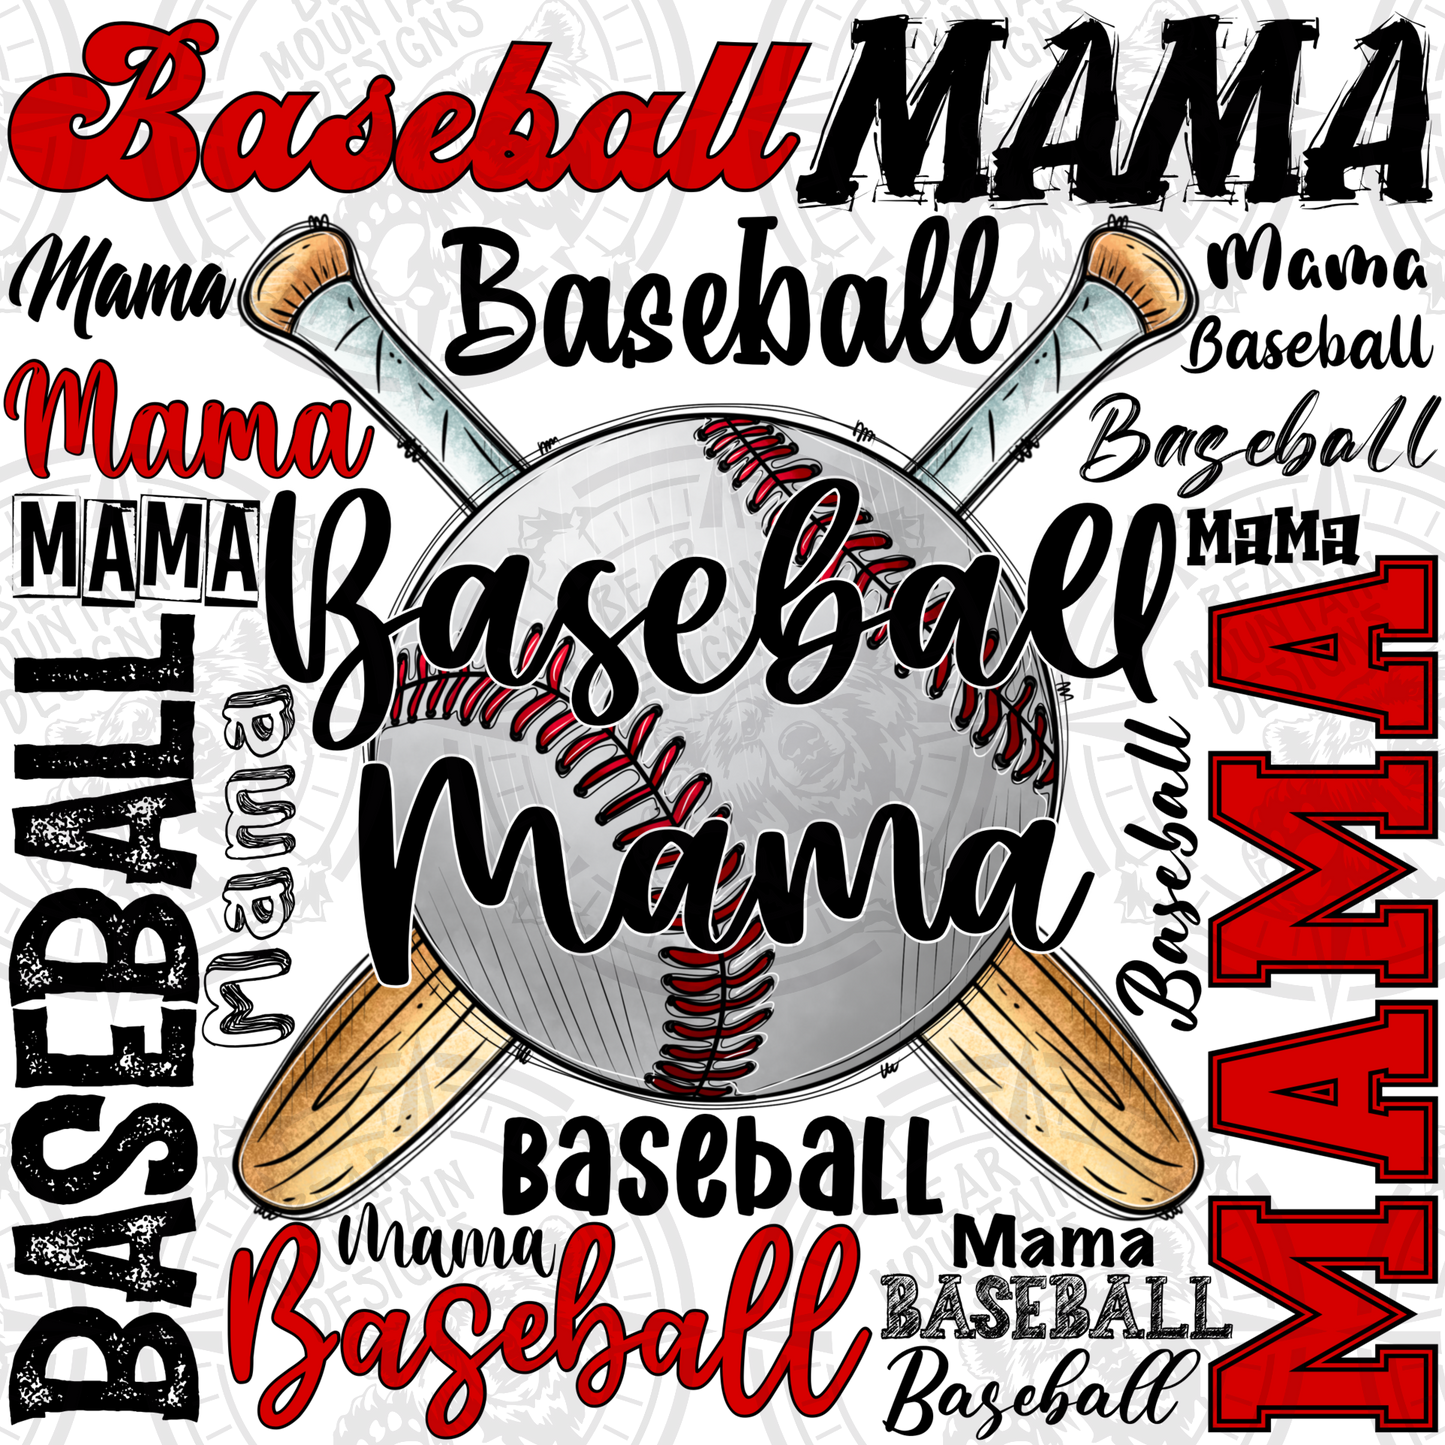 Baseball Mama Collage